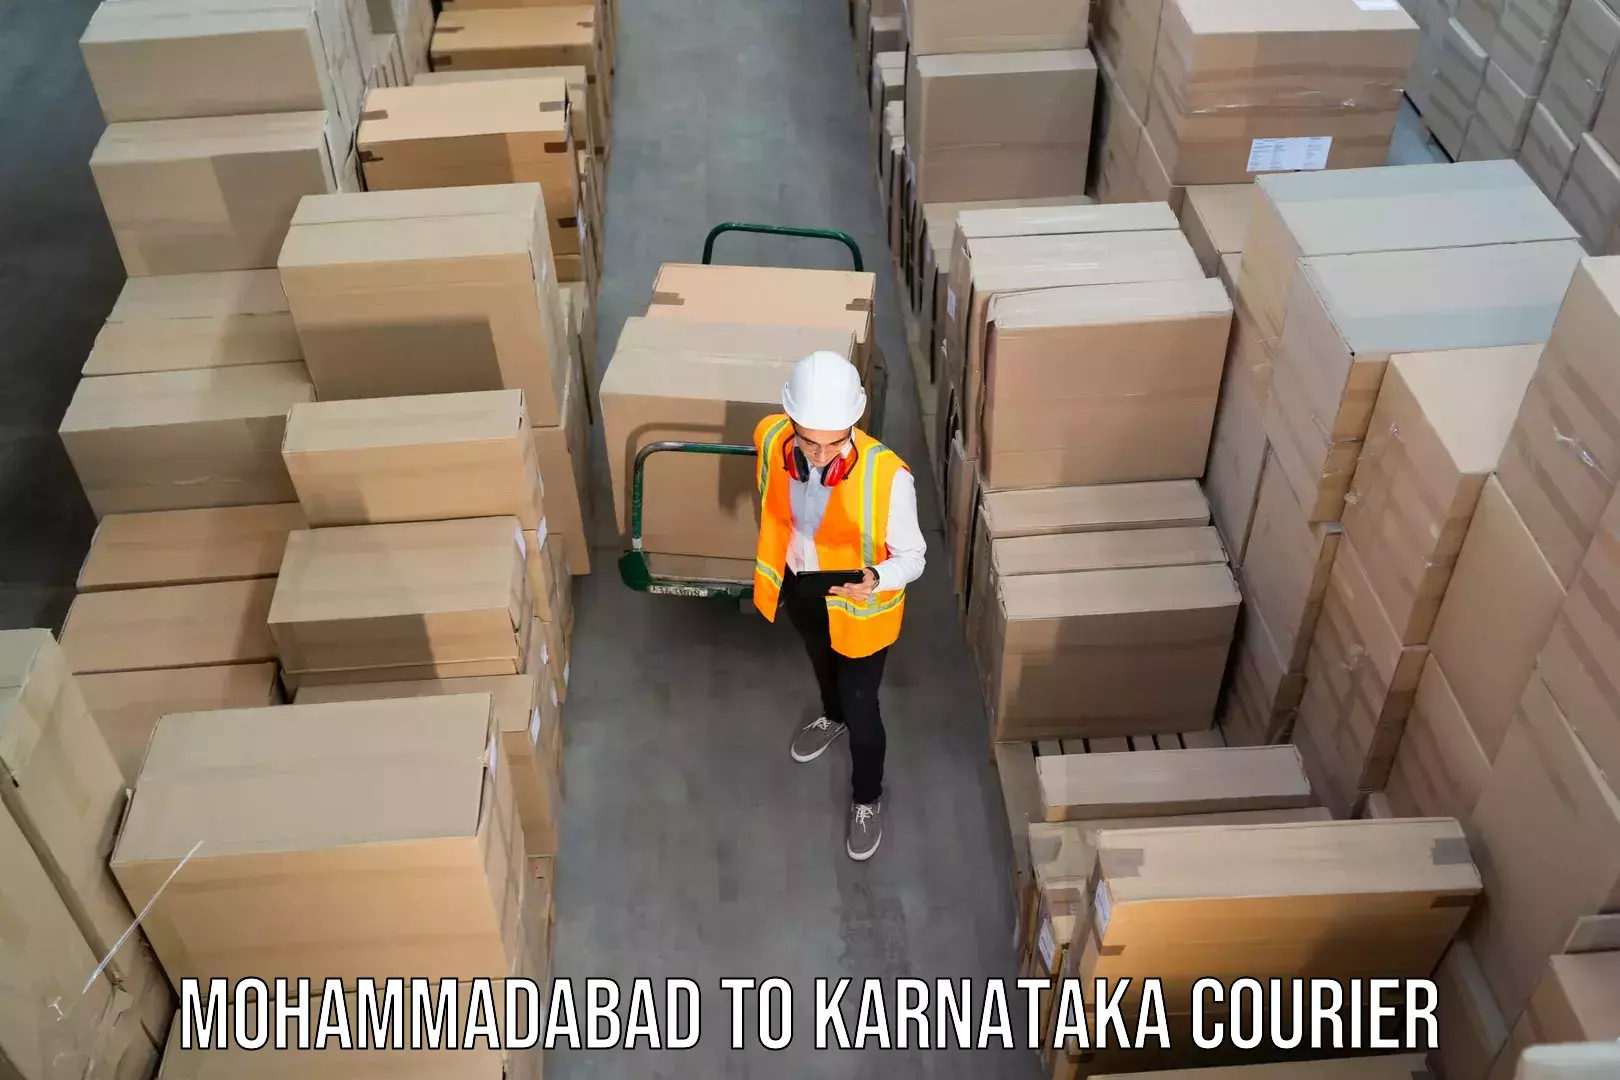 User-friendly delivery service Mohammadabad to Karnataka